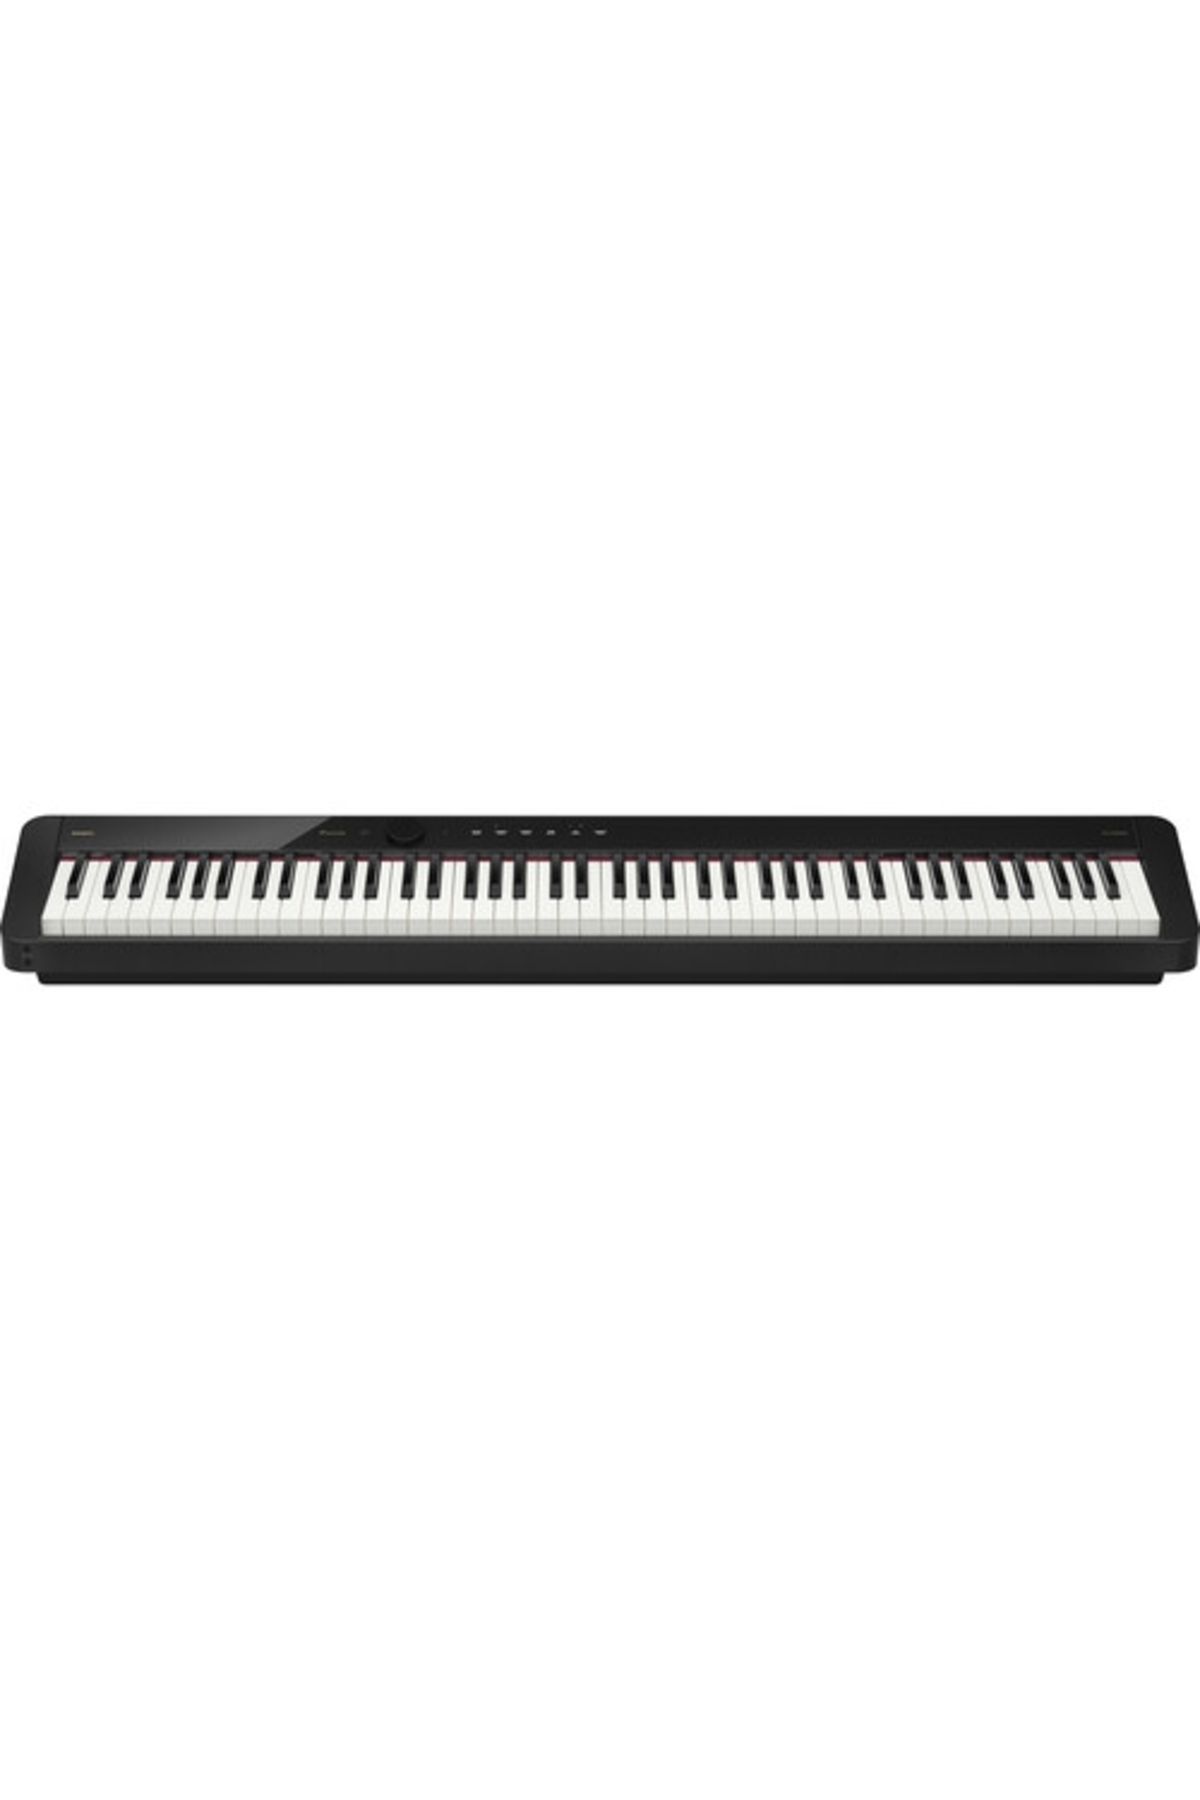 Casio PX-S5000BK Dijital Piyano (Siyah)